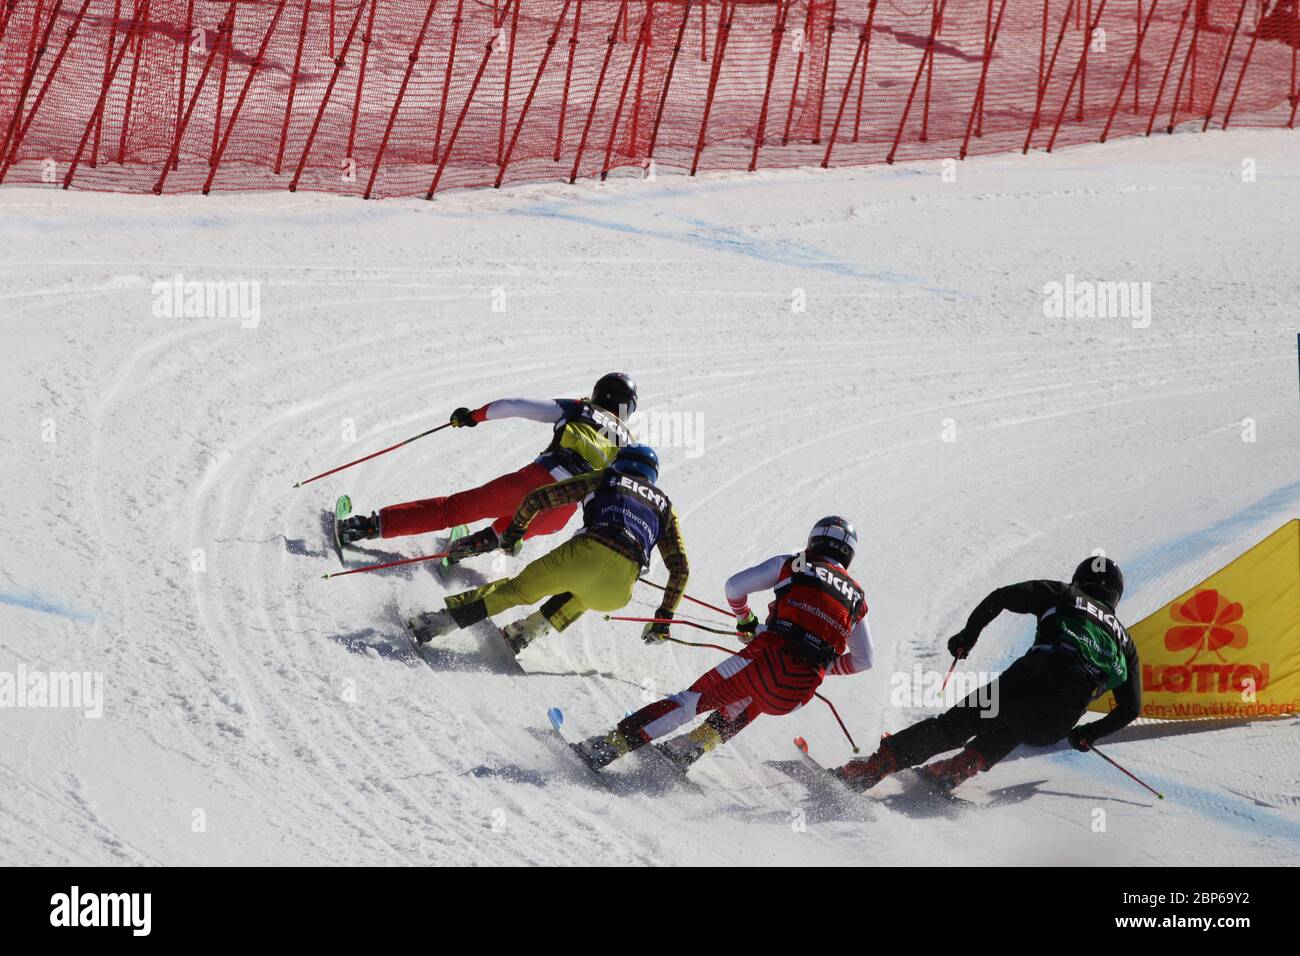 FIS Ski Cross World Cup Feldberg - Day 1 Stock Photo - Alamy